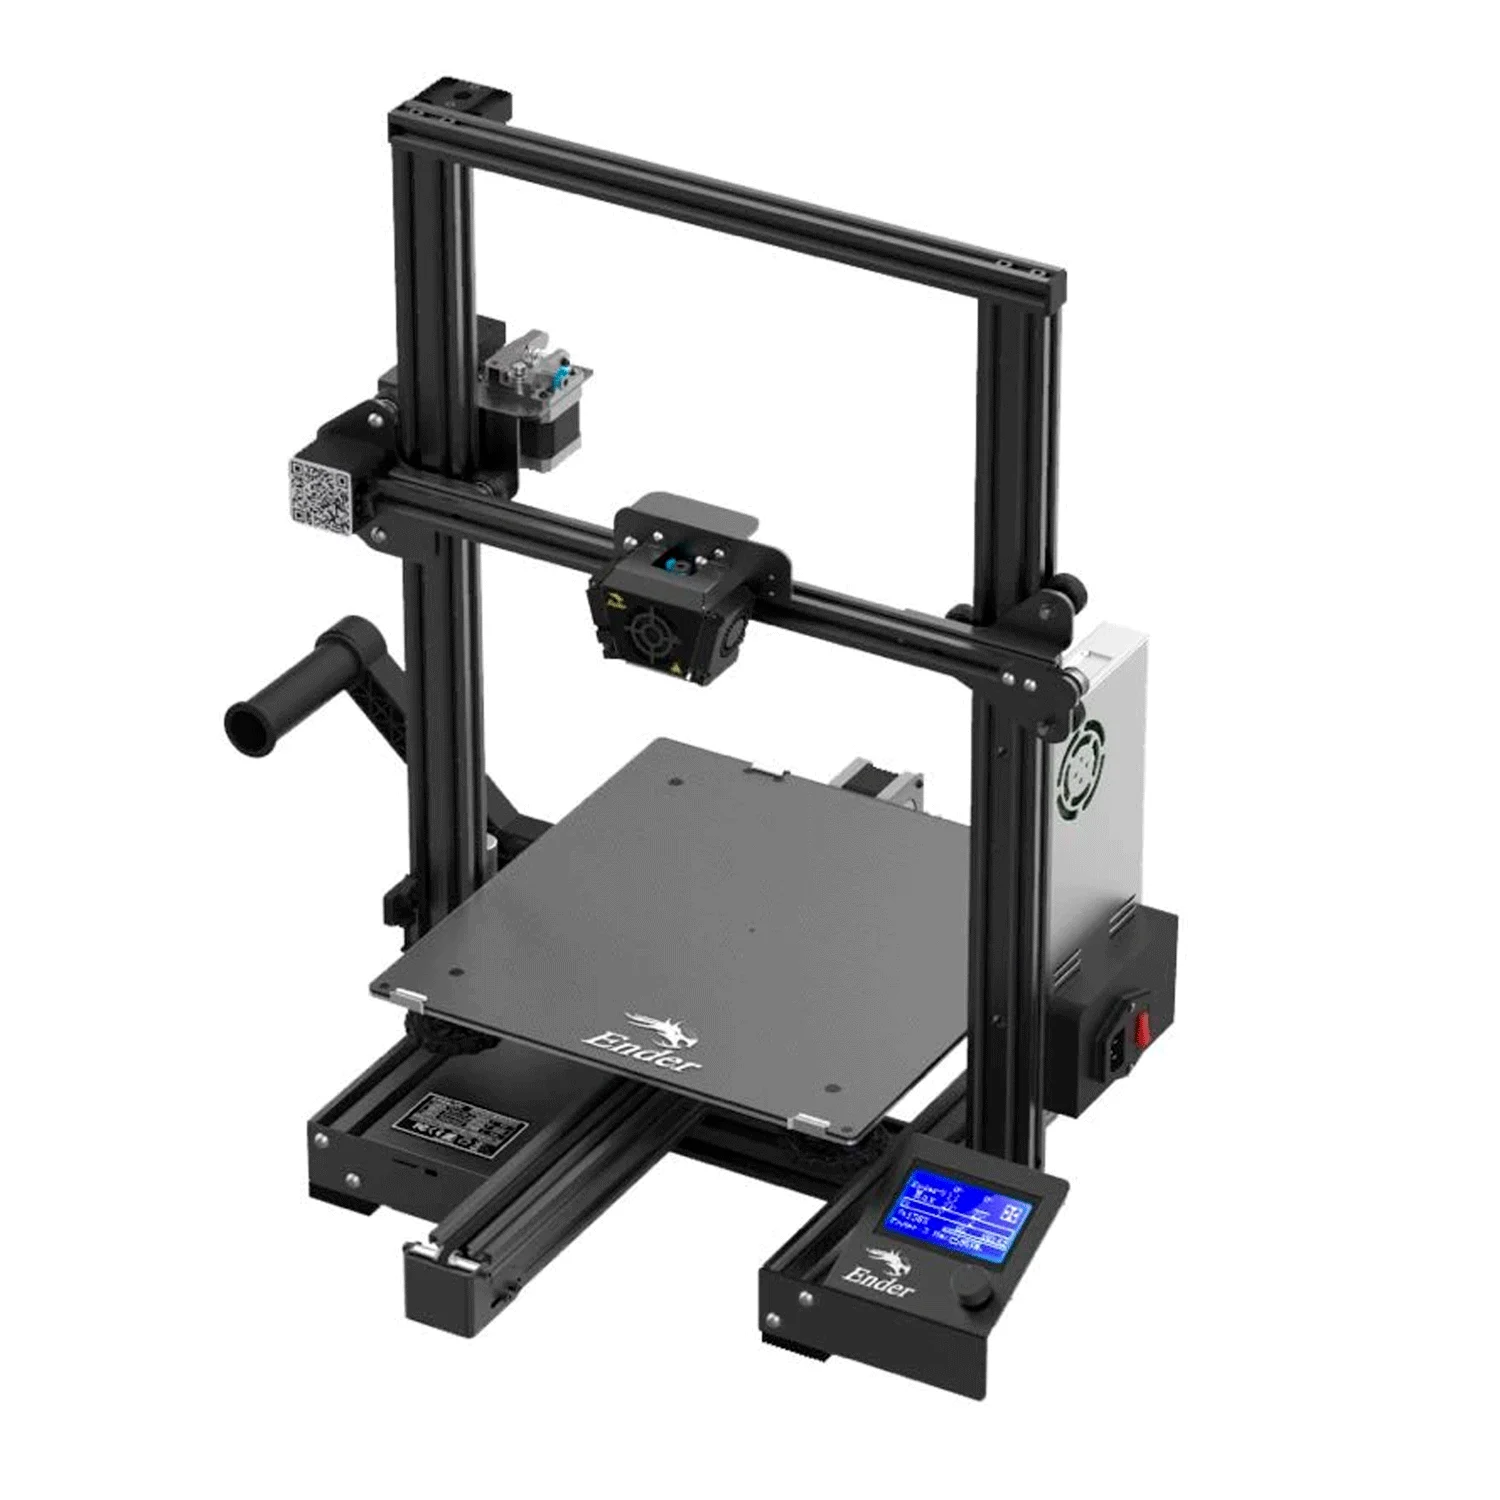 Impressora 3D Creality Ender 3 Max